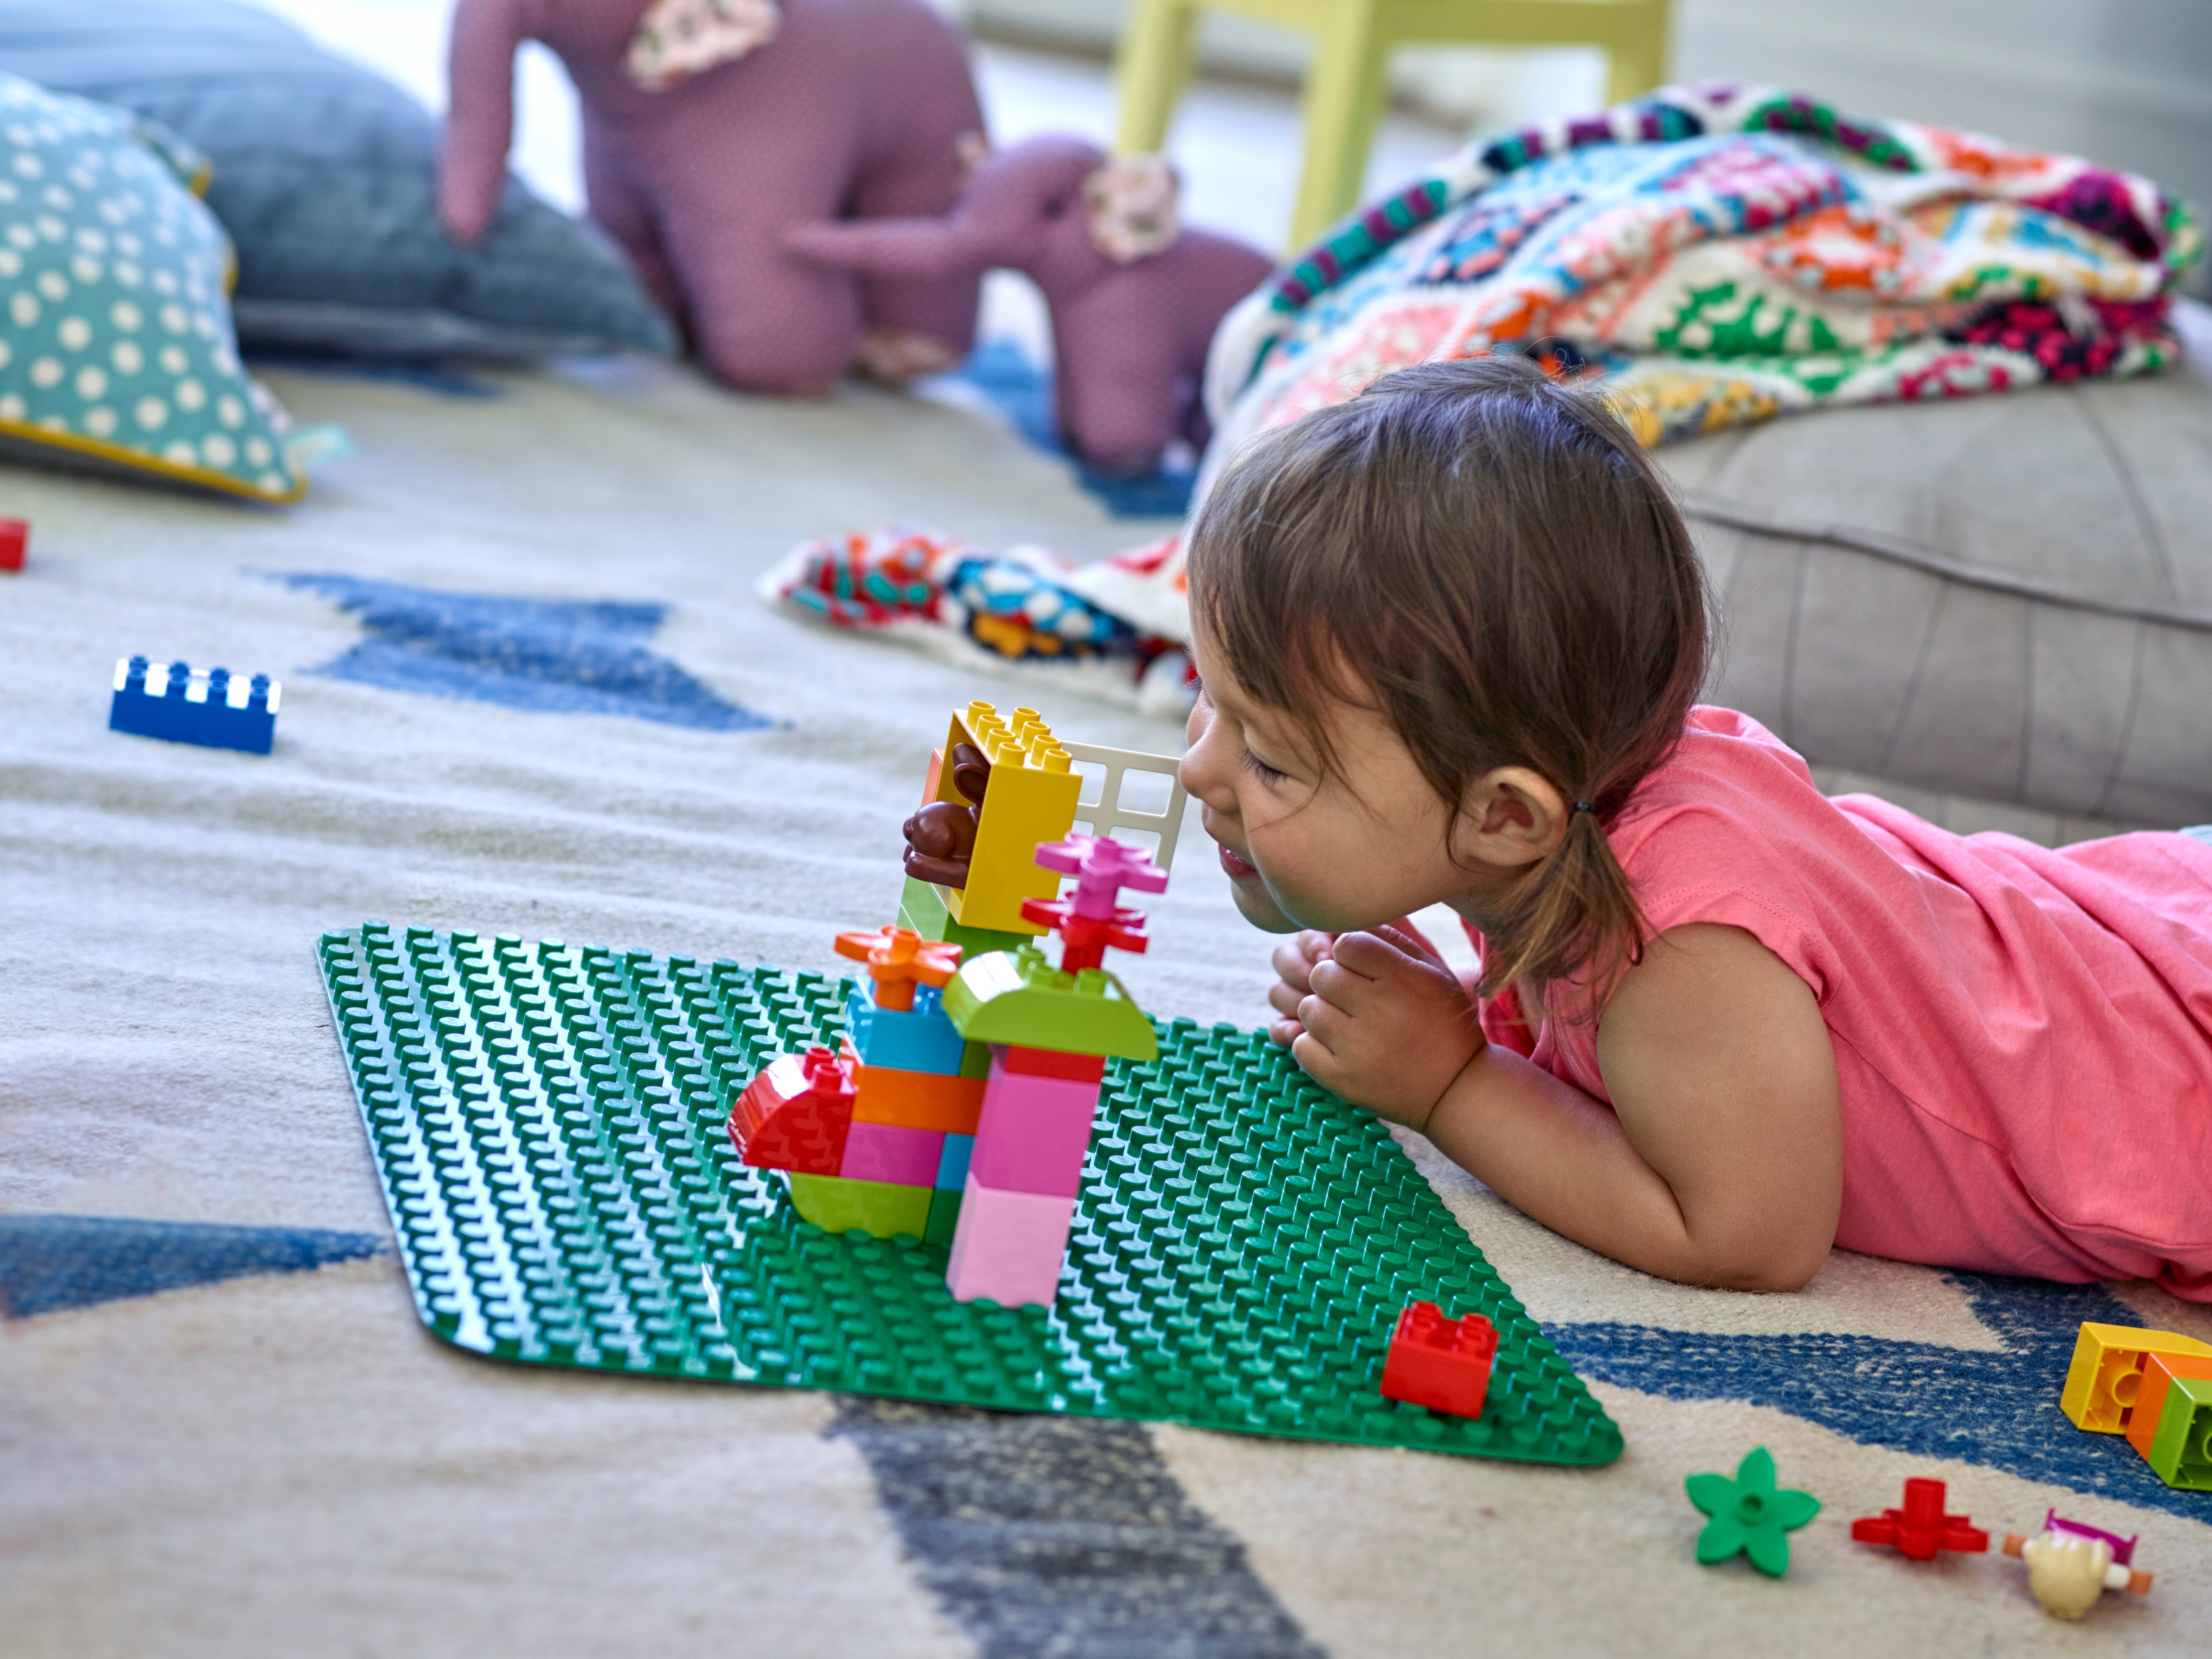 Lego Duplo Base Plate Green 24 x 24 Studs 15” x 15” - EUC & Clean  (sanitized)